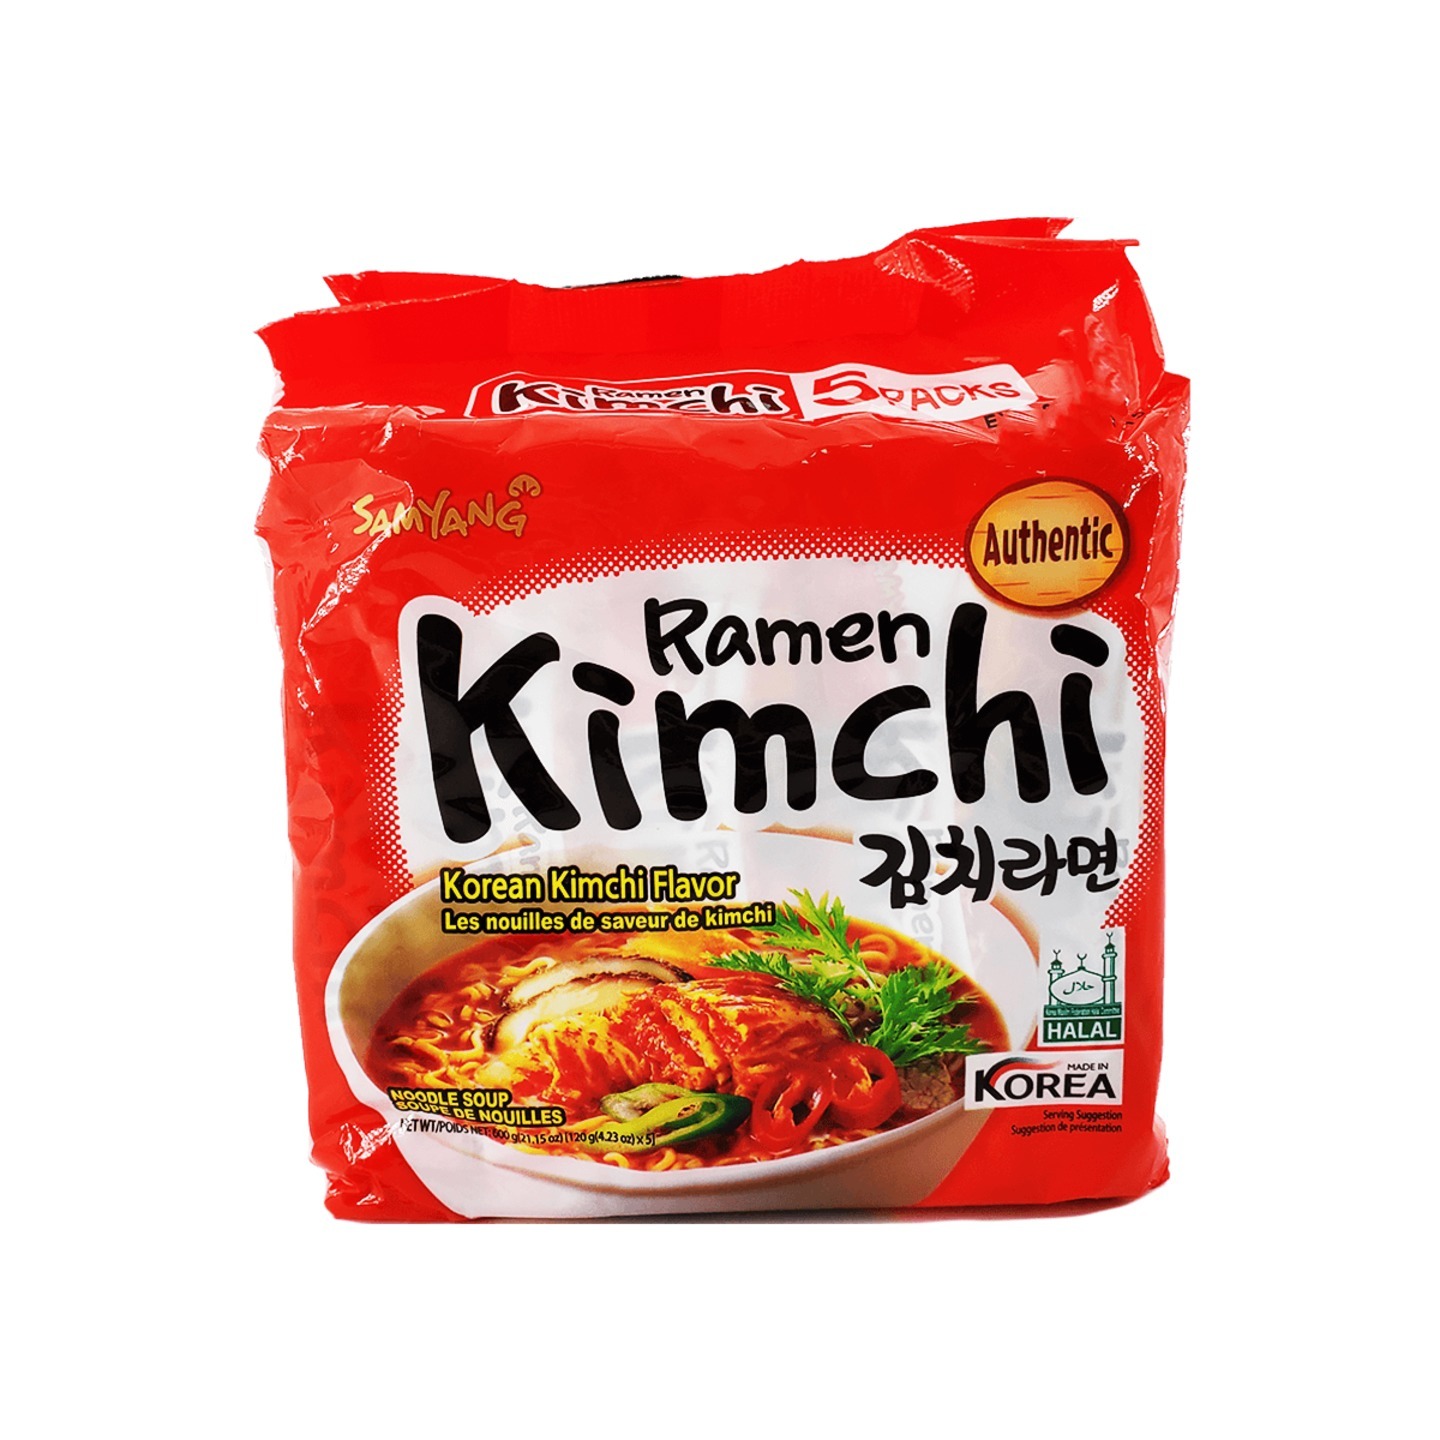 Samyang Kimchi Ramen Pack of 2